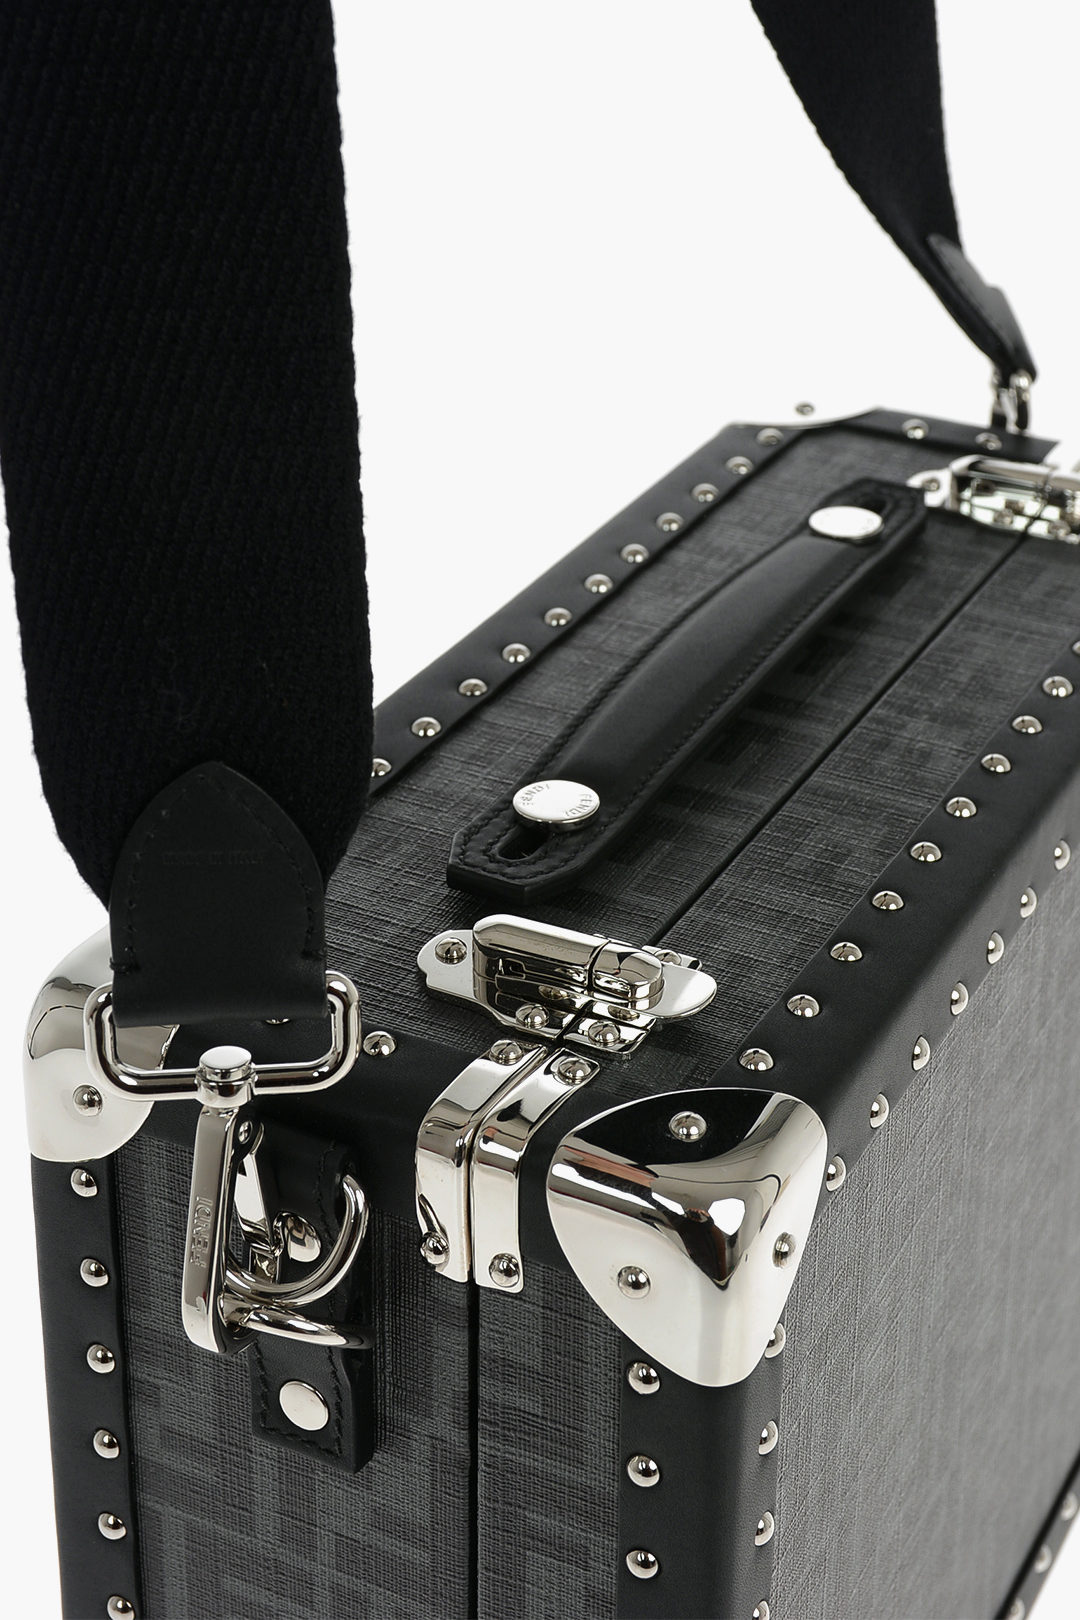 Fendi monogram-print Leather Clutch Bag